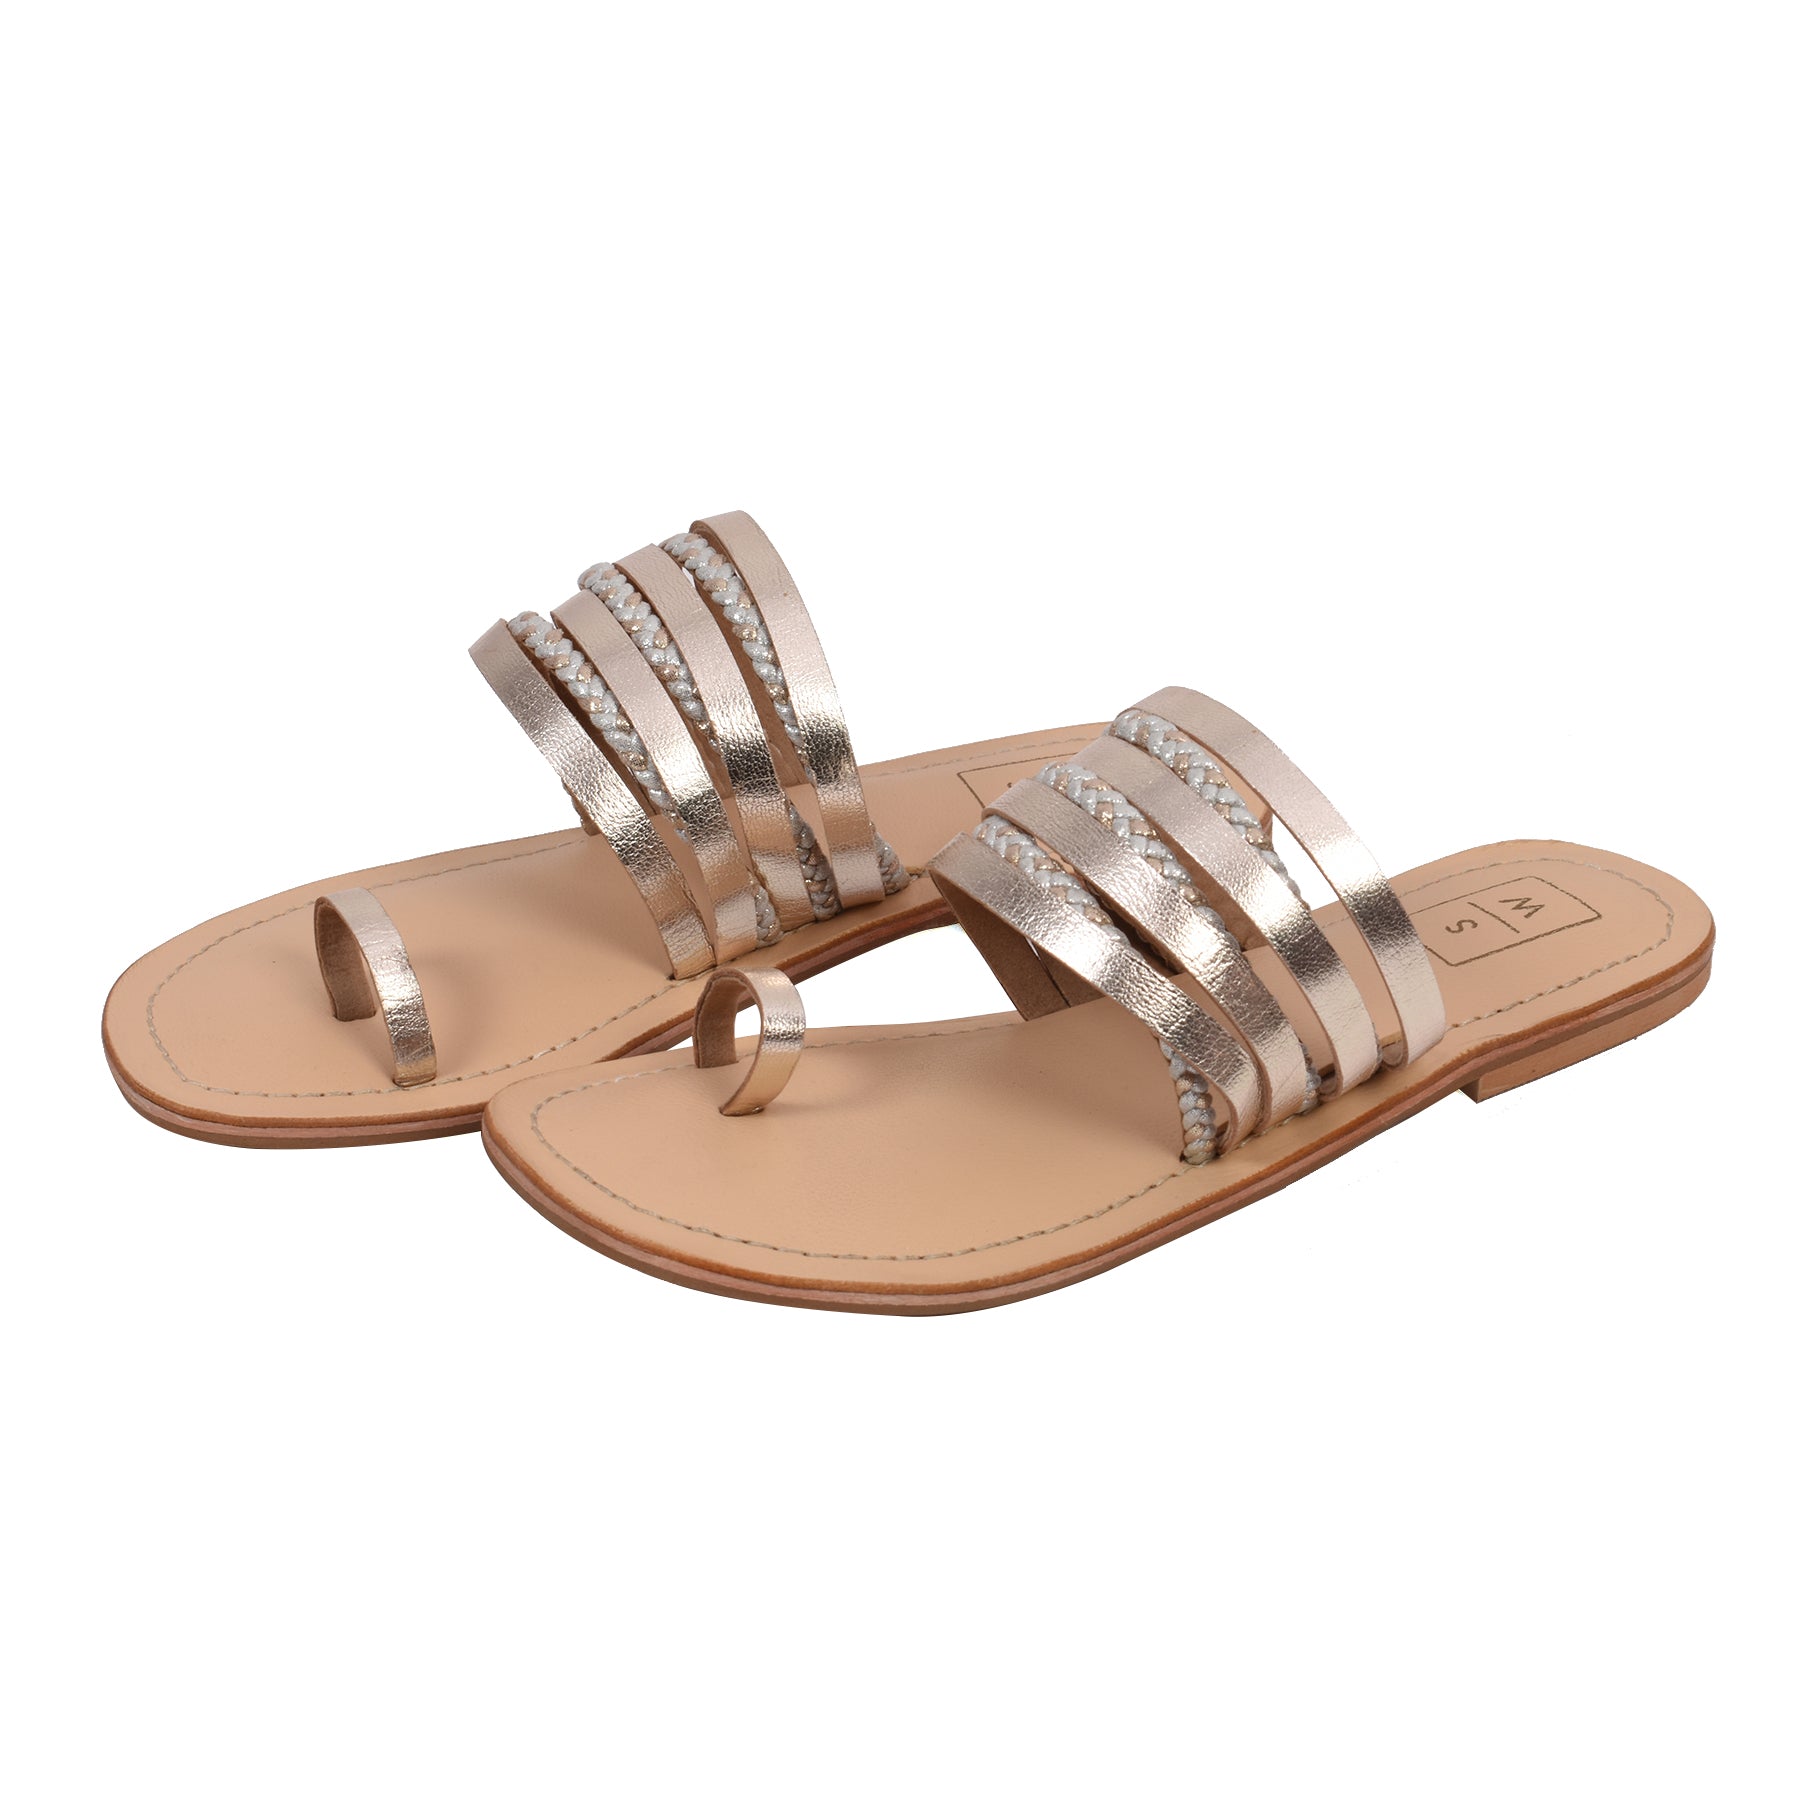 Purvai Gold & Silver Multi-Strap Sandals